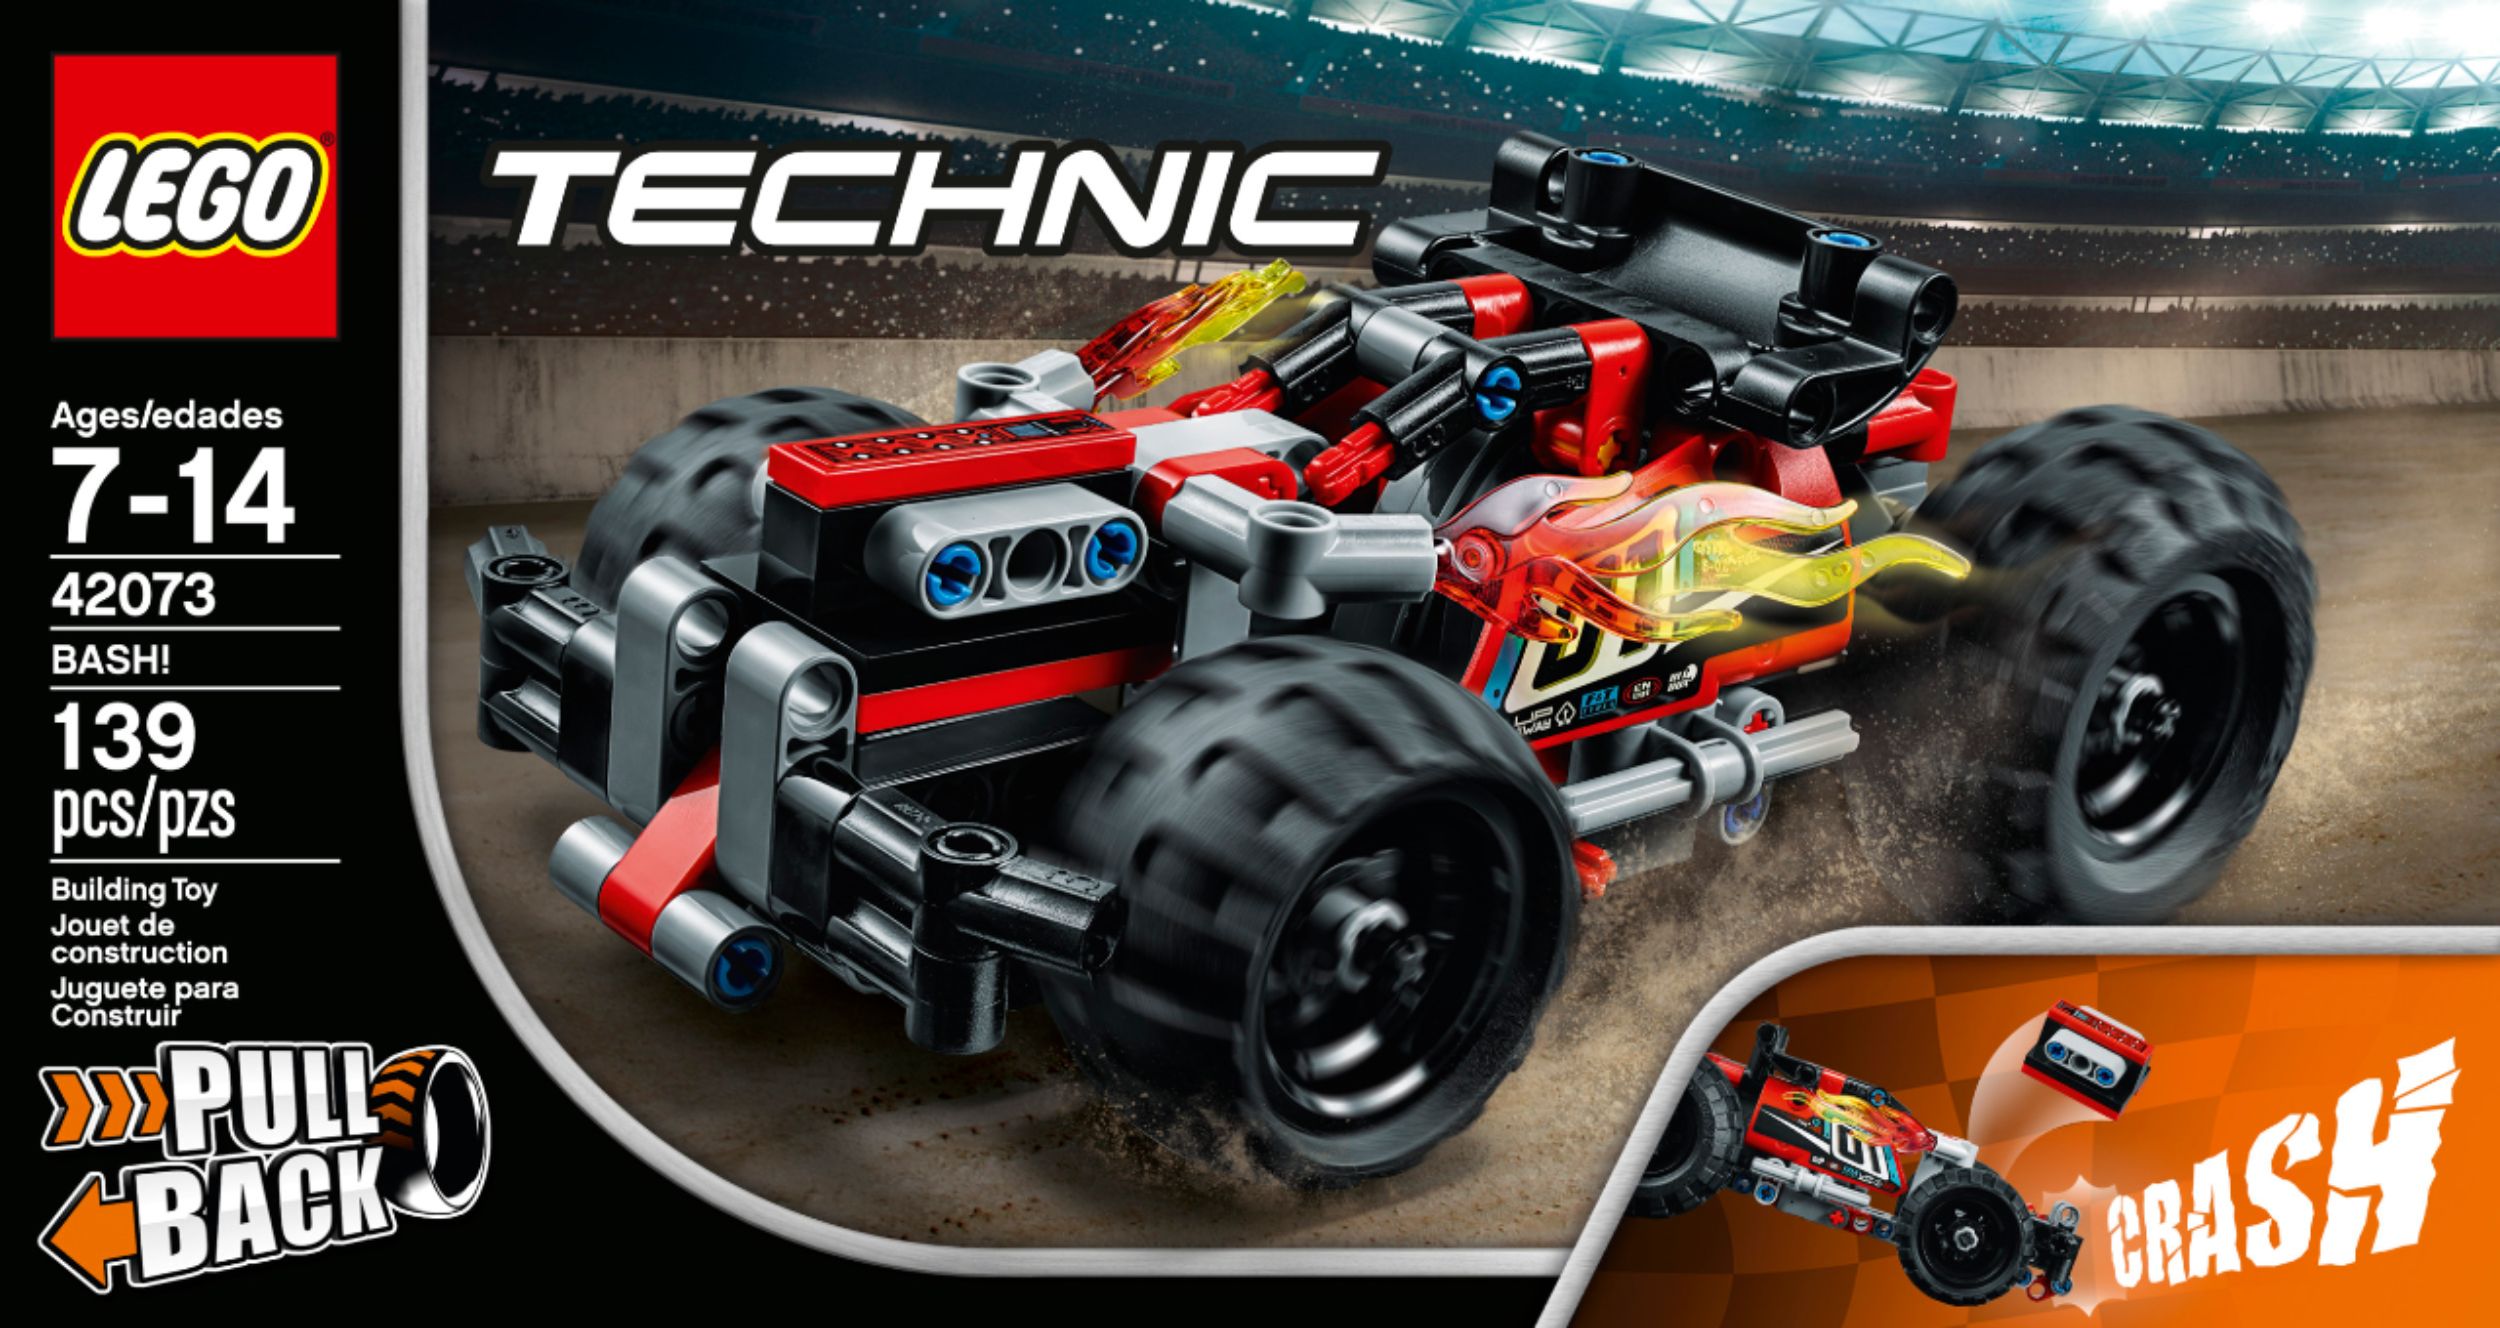 Best LEGO Technic BASH! 42073 6210337